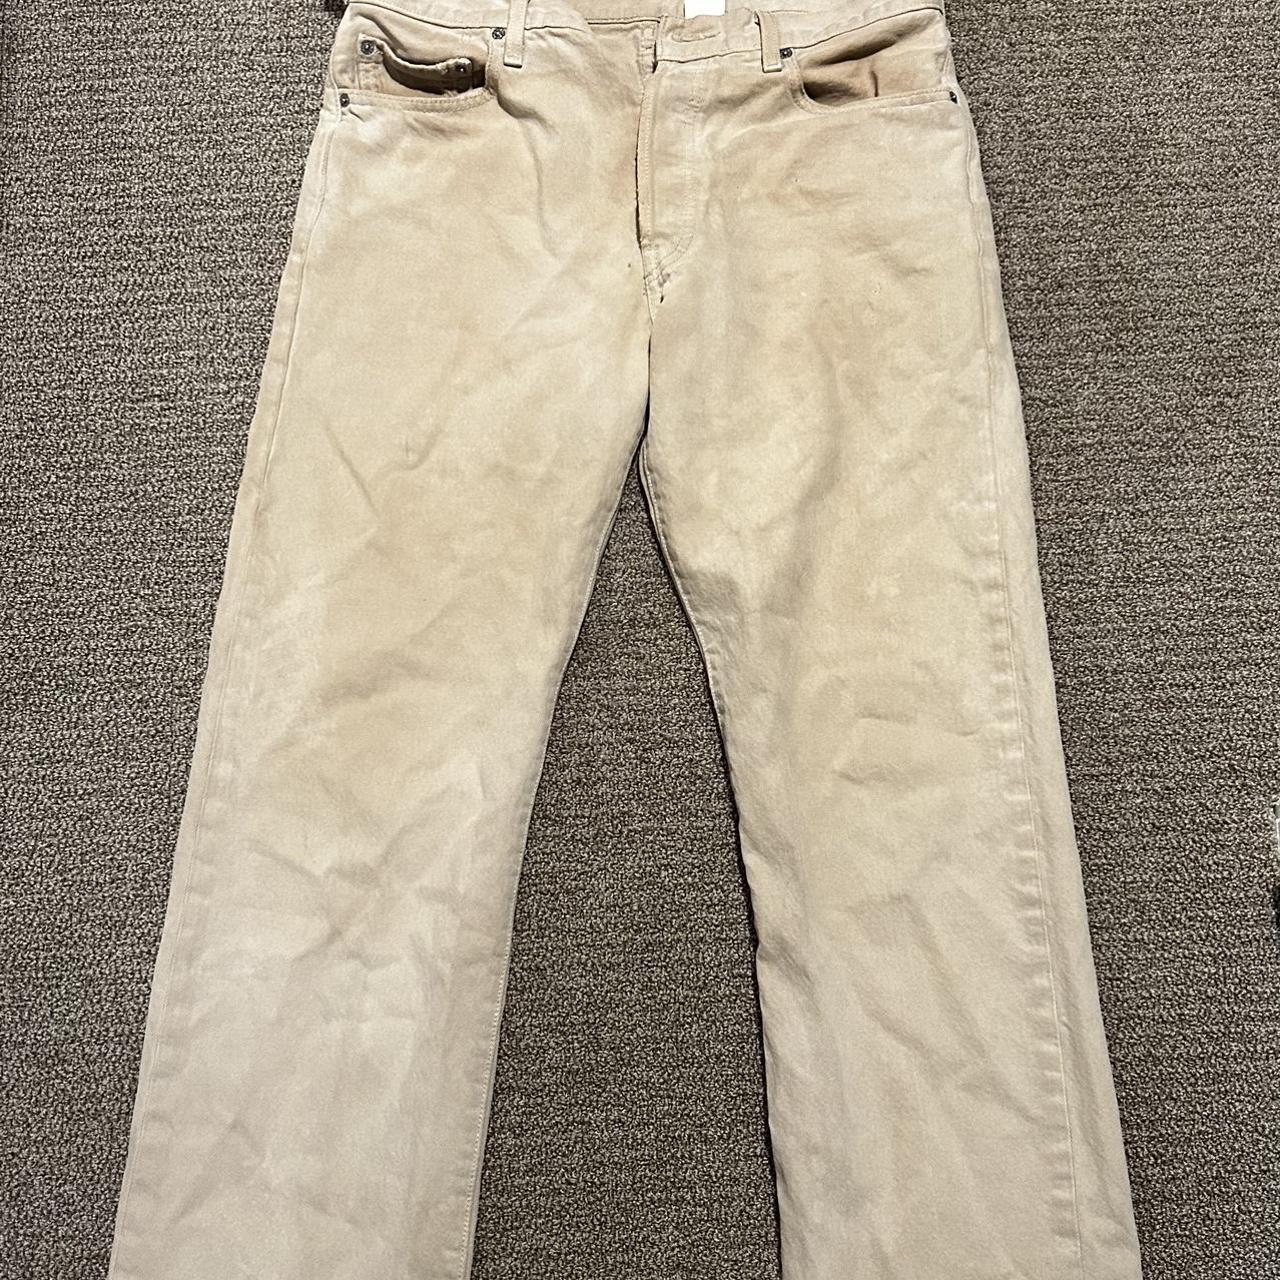 Vintage 501 Levi jeans whitish/tan color 31in waist... - Depop